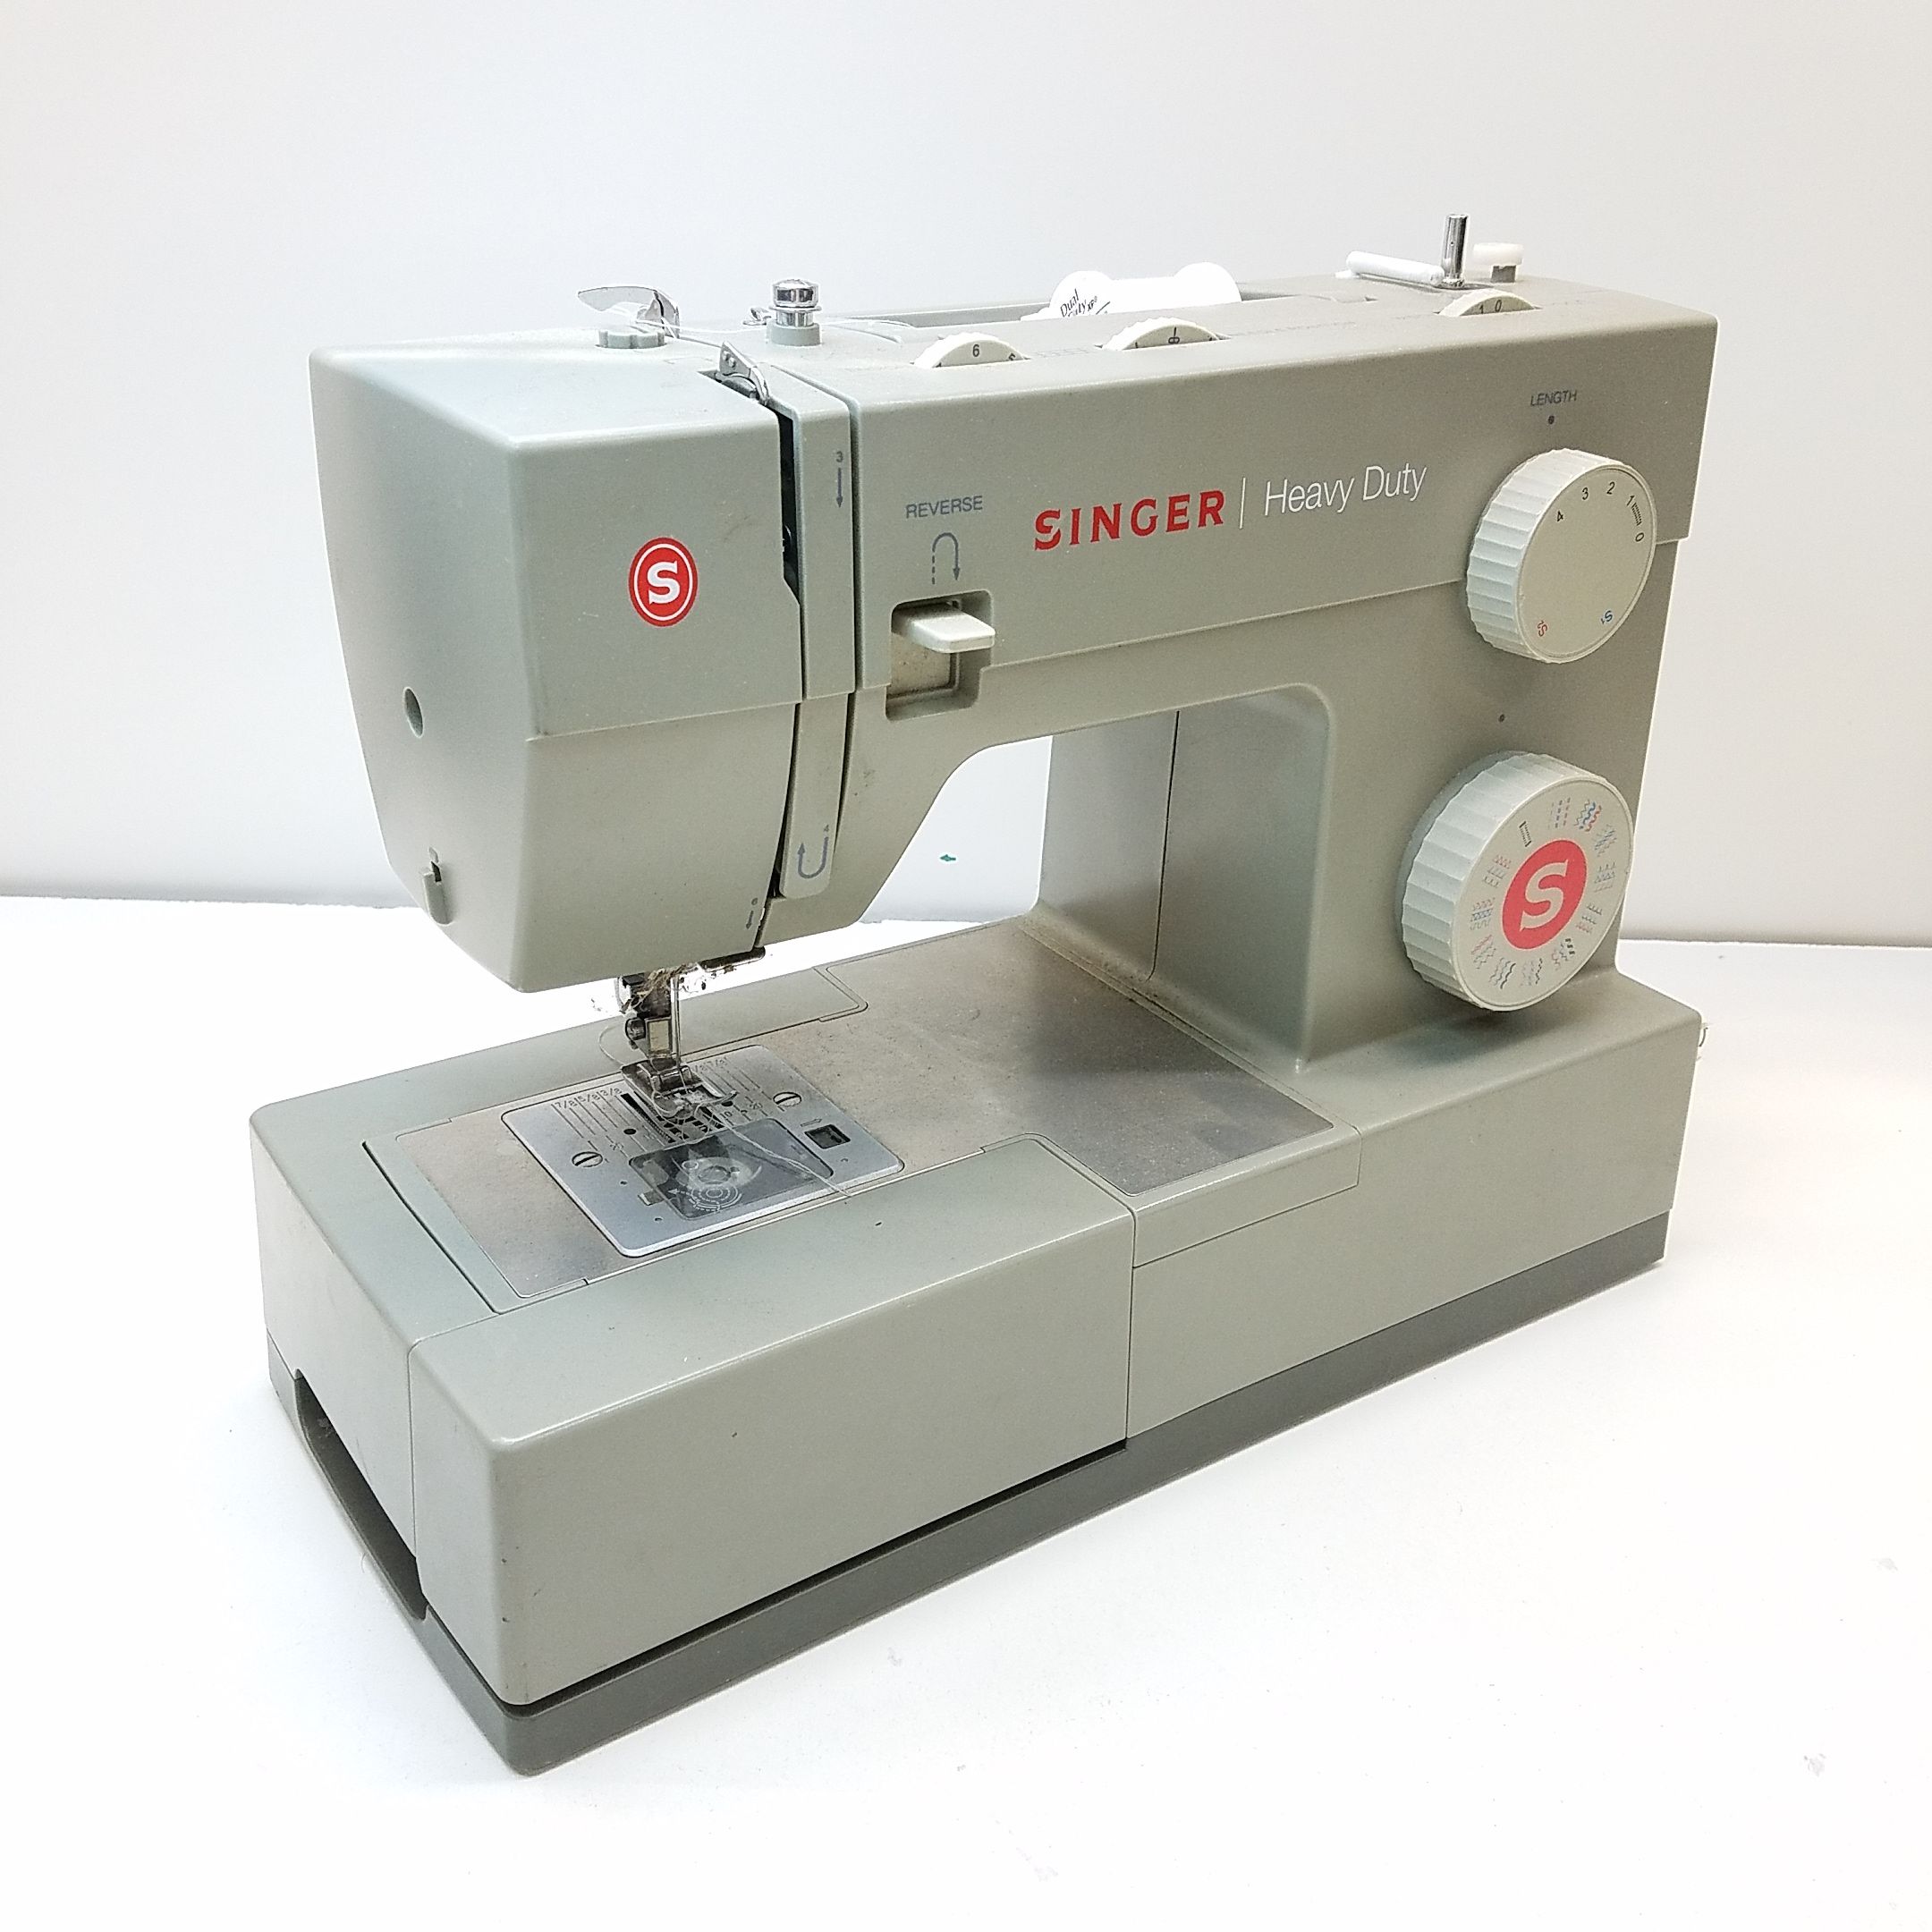 SINGER 4452 Heavy Duty Sewing Machine - Rio Grande Trade